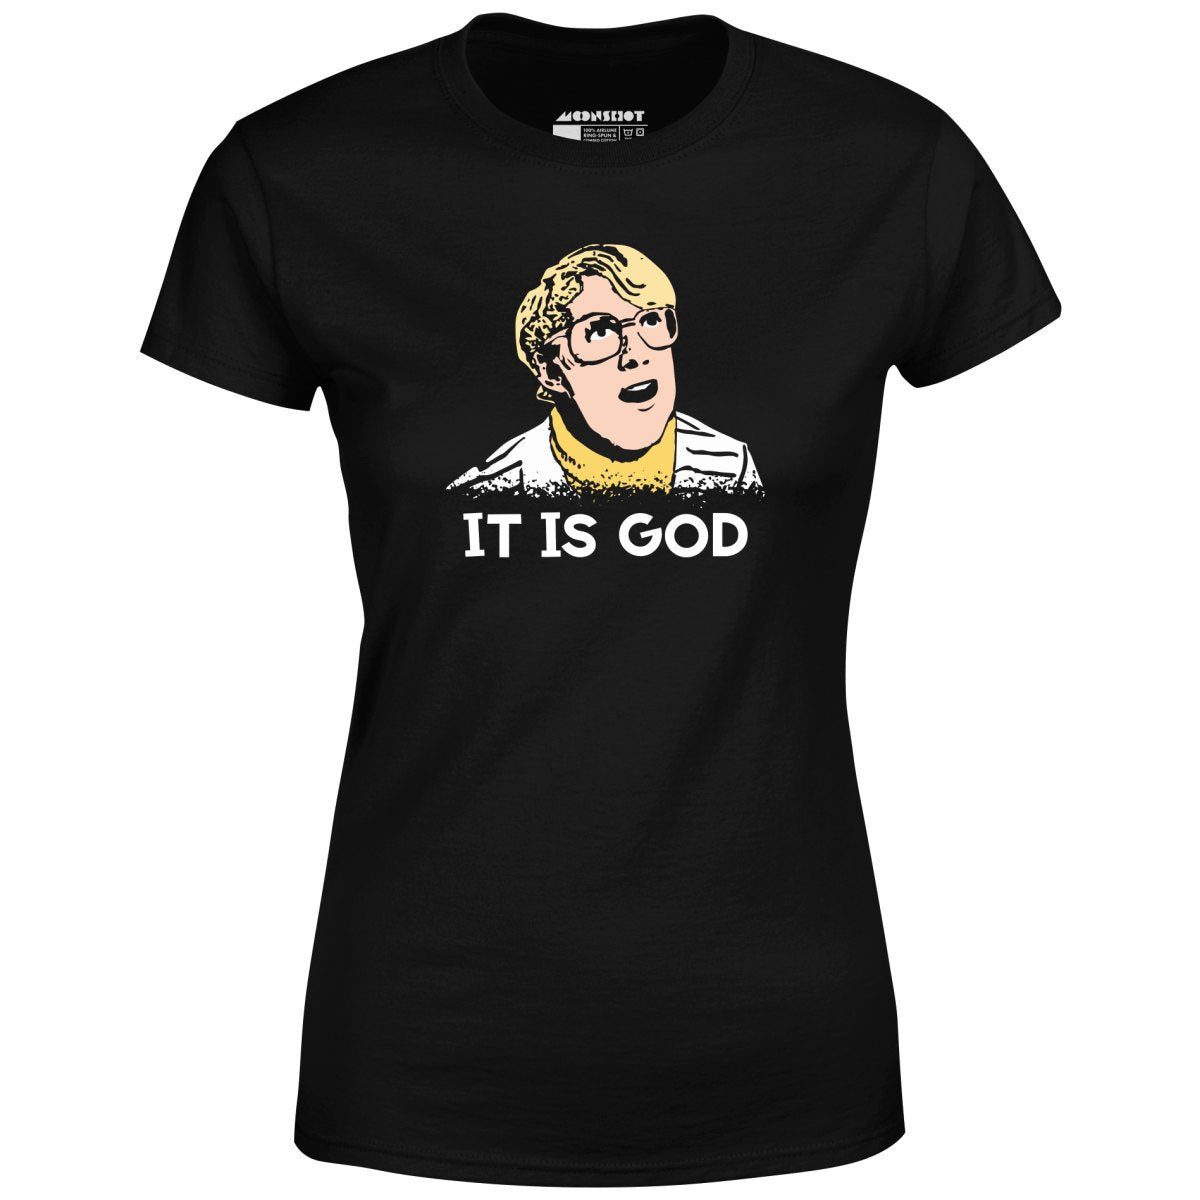 Real Genius - Kent - It is God - Women's T-Shirt